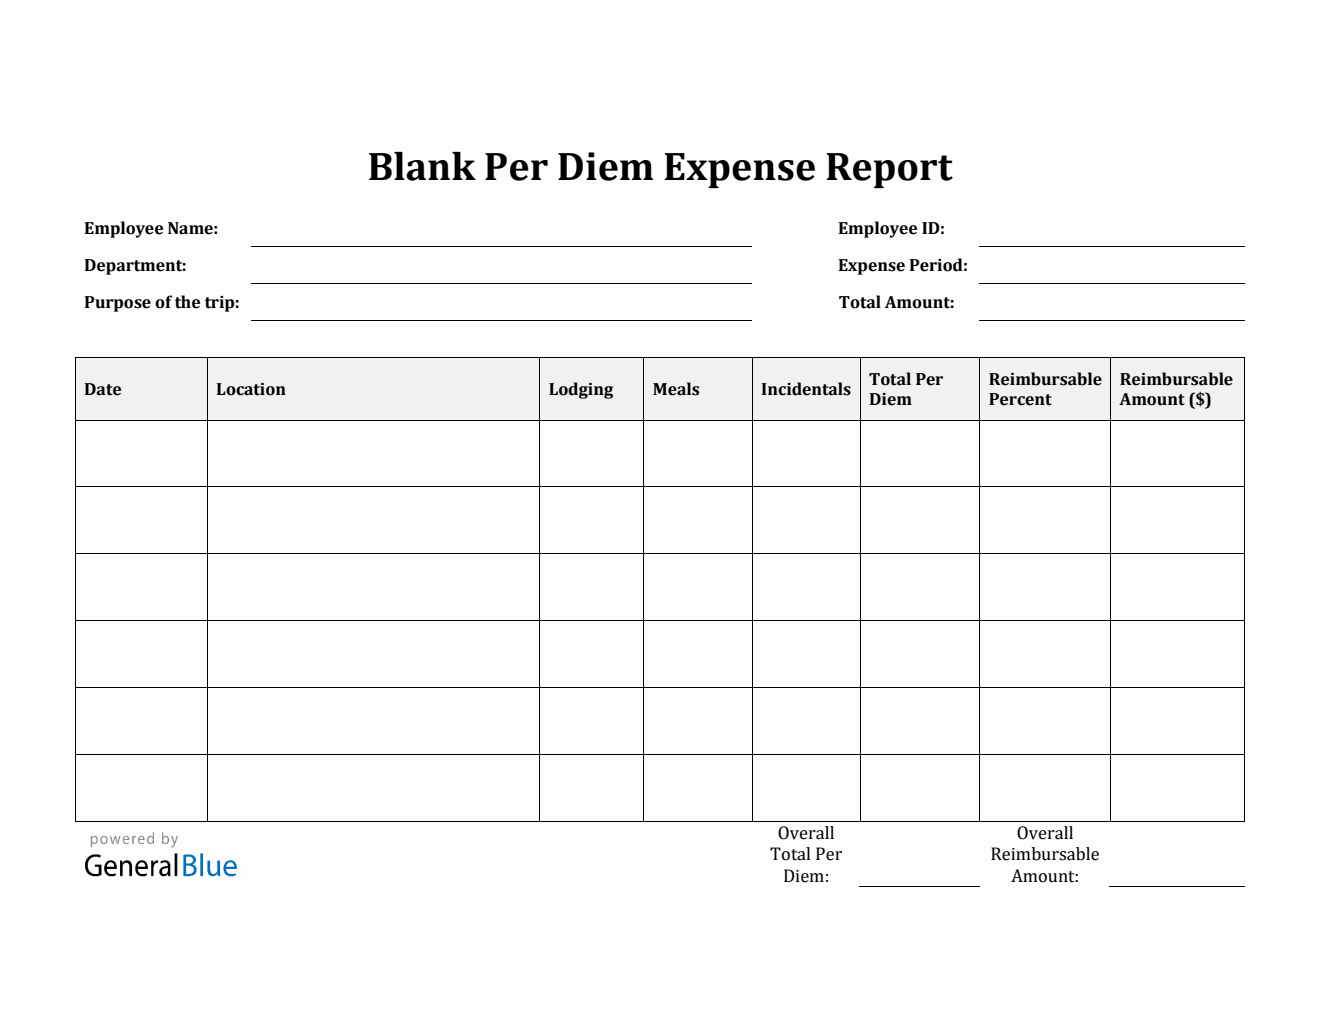 Blank Per Diem Expense Report Template in Word (Plain)